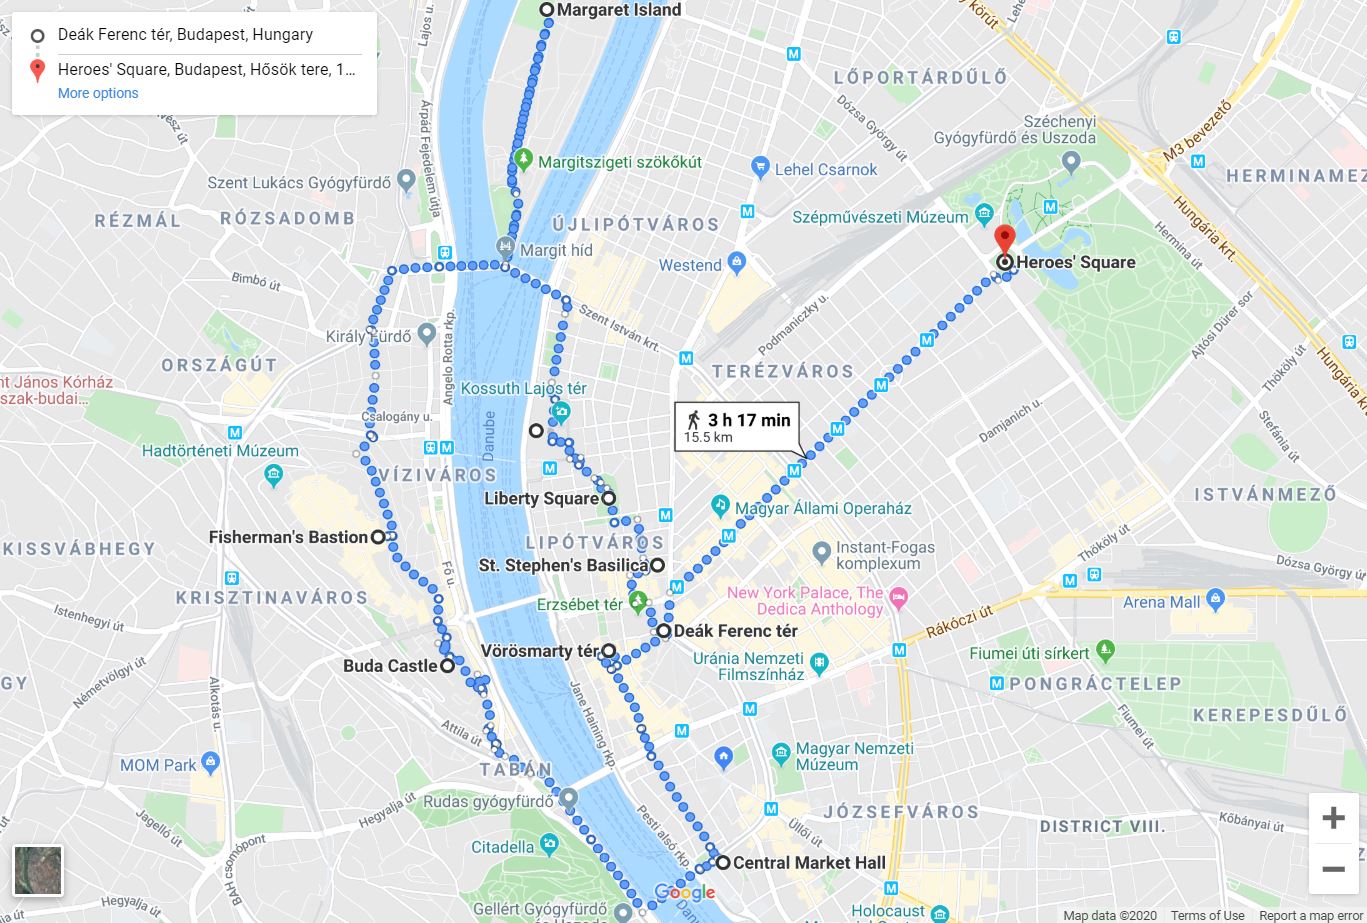 tourist walking map of budapest